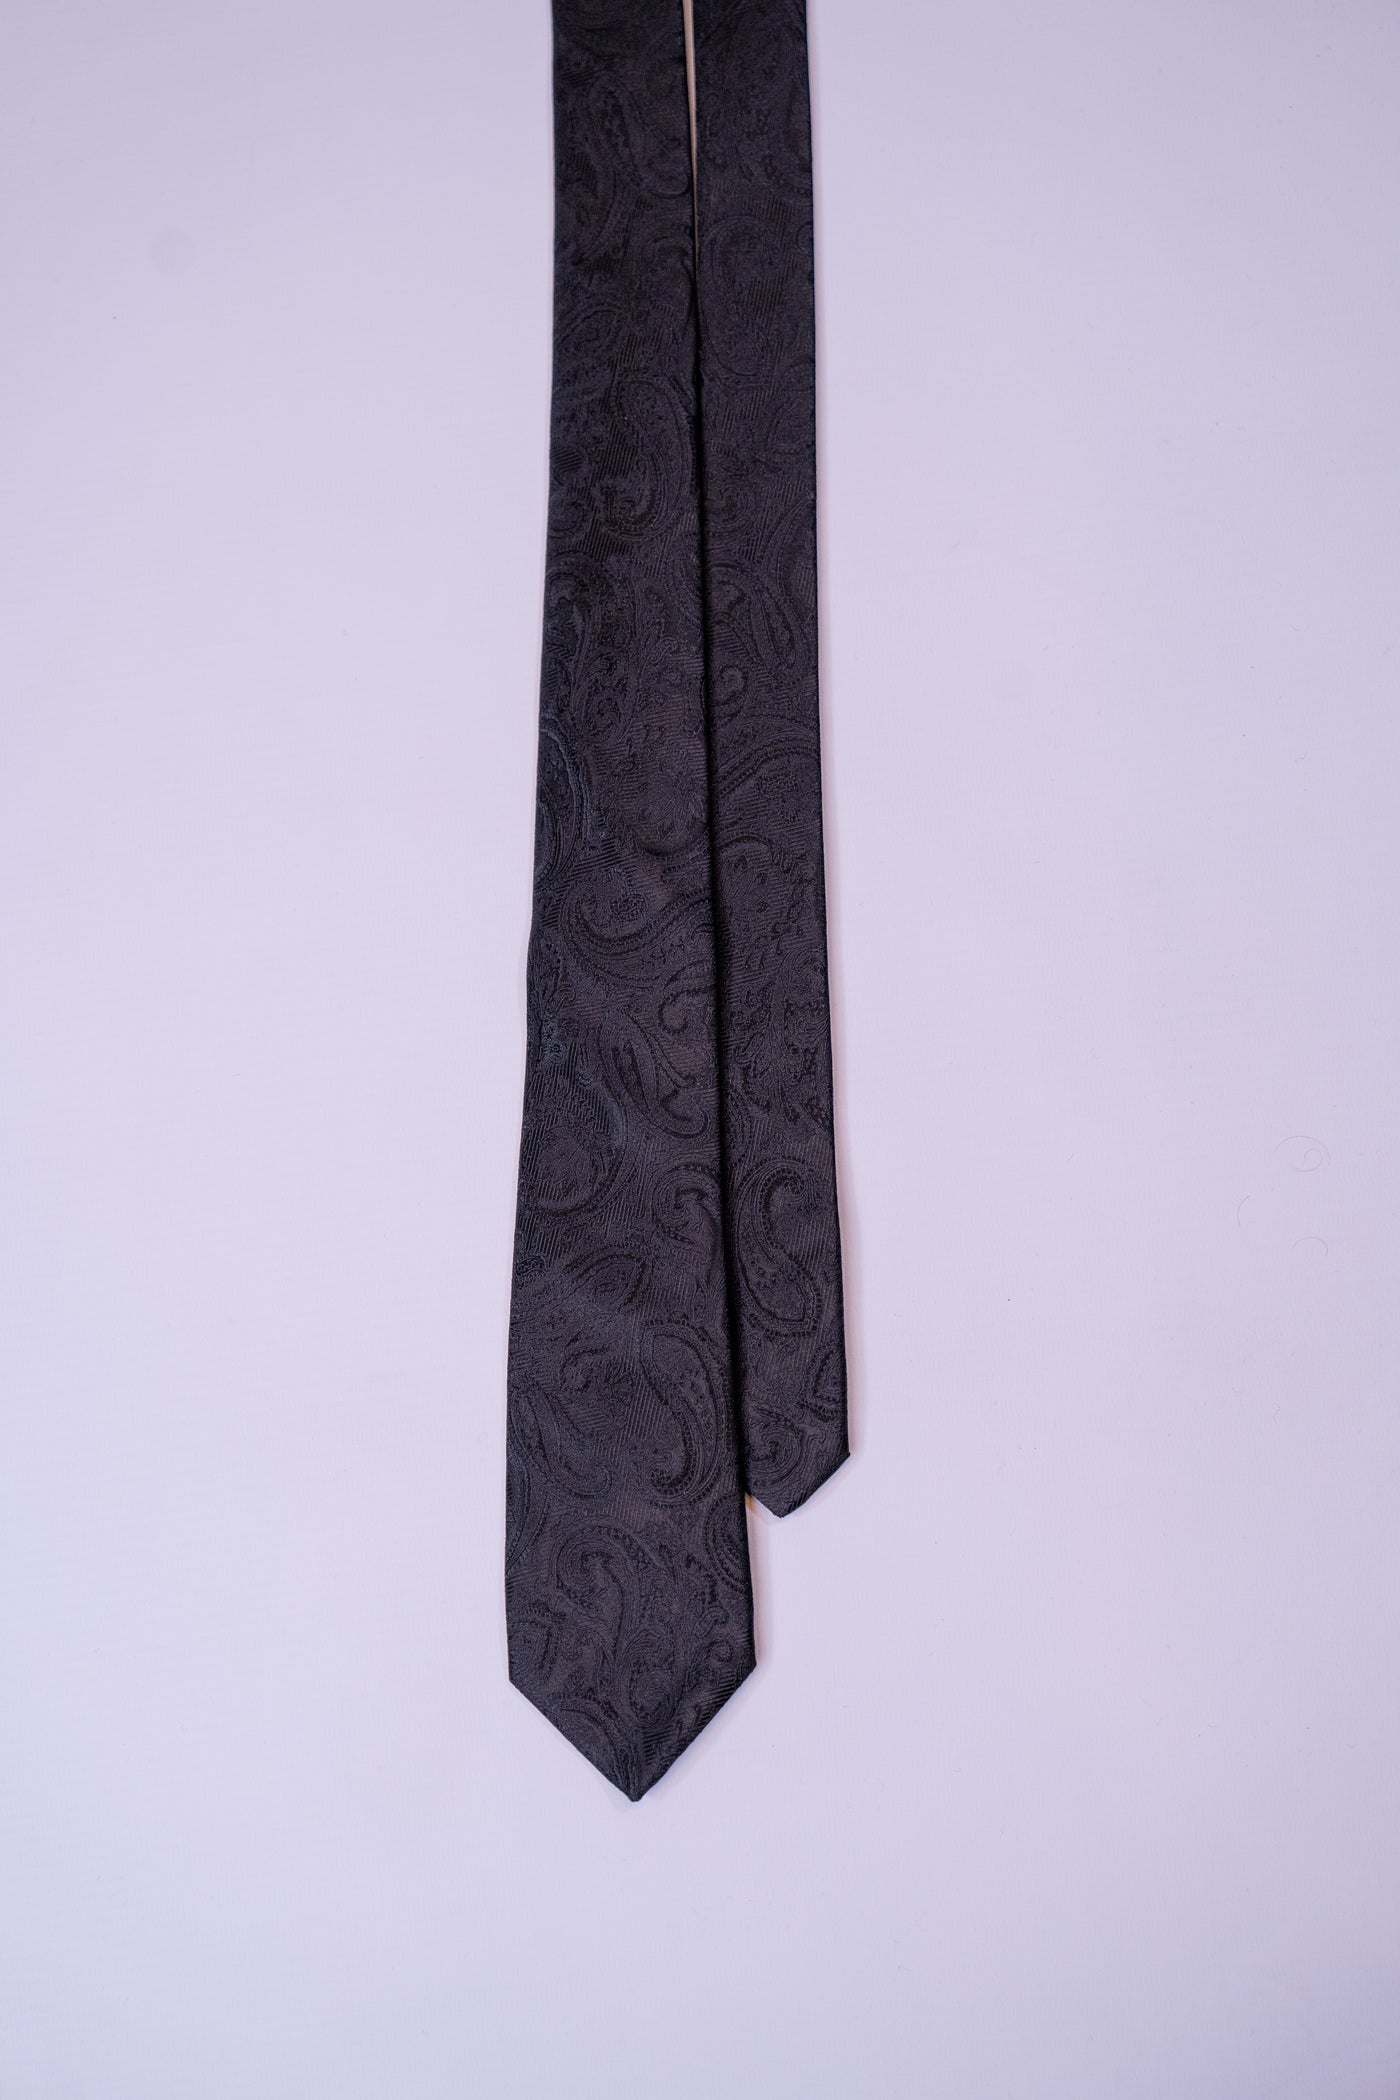 Golman Copenhagen sort mønstret slips